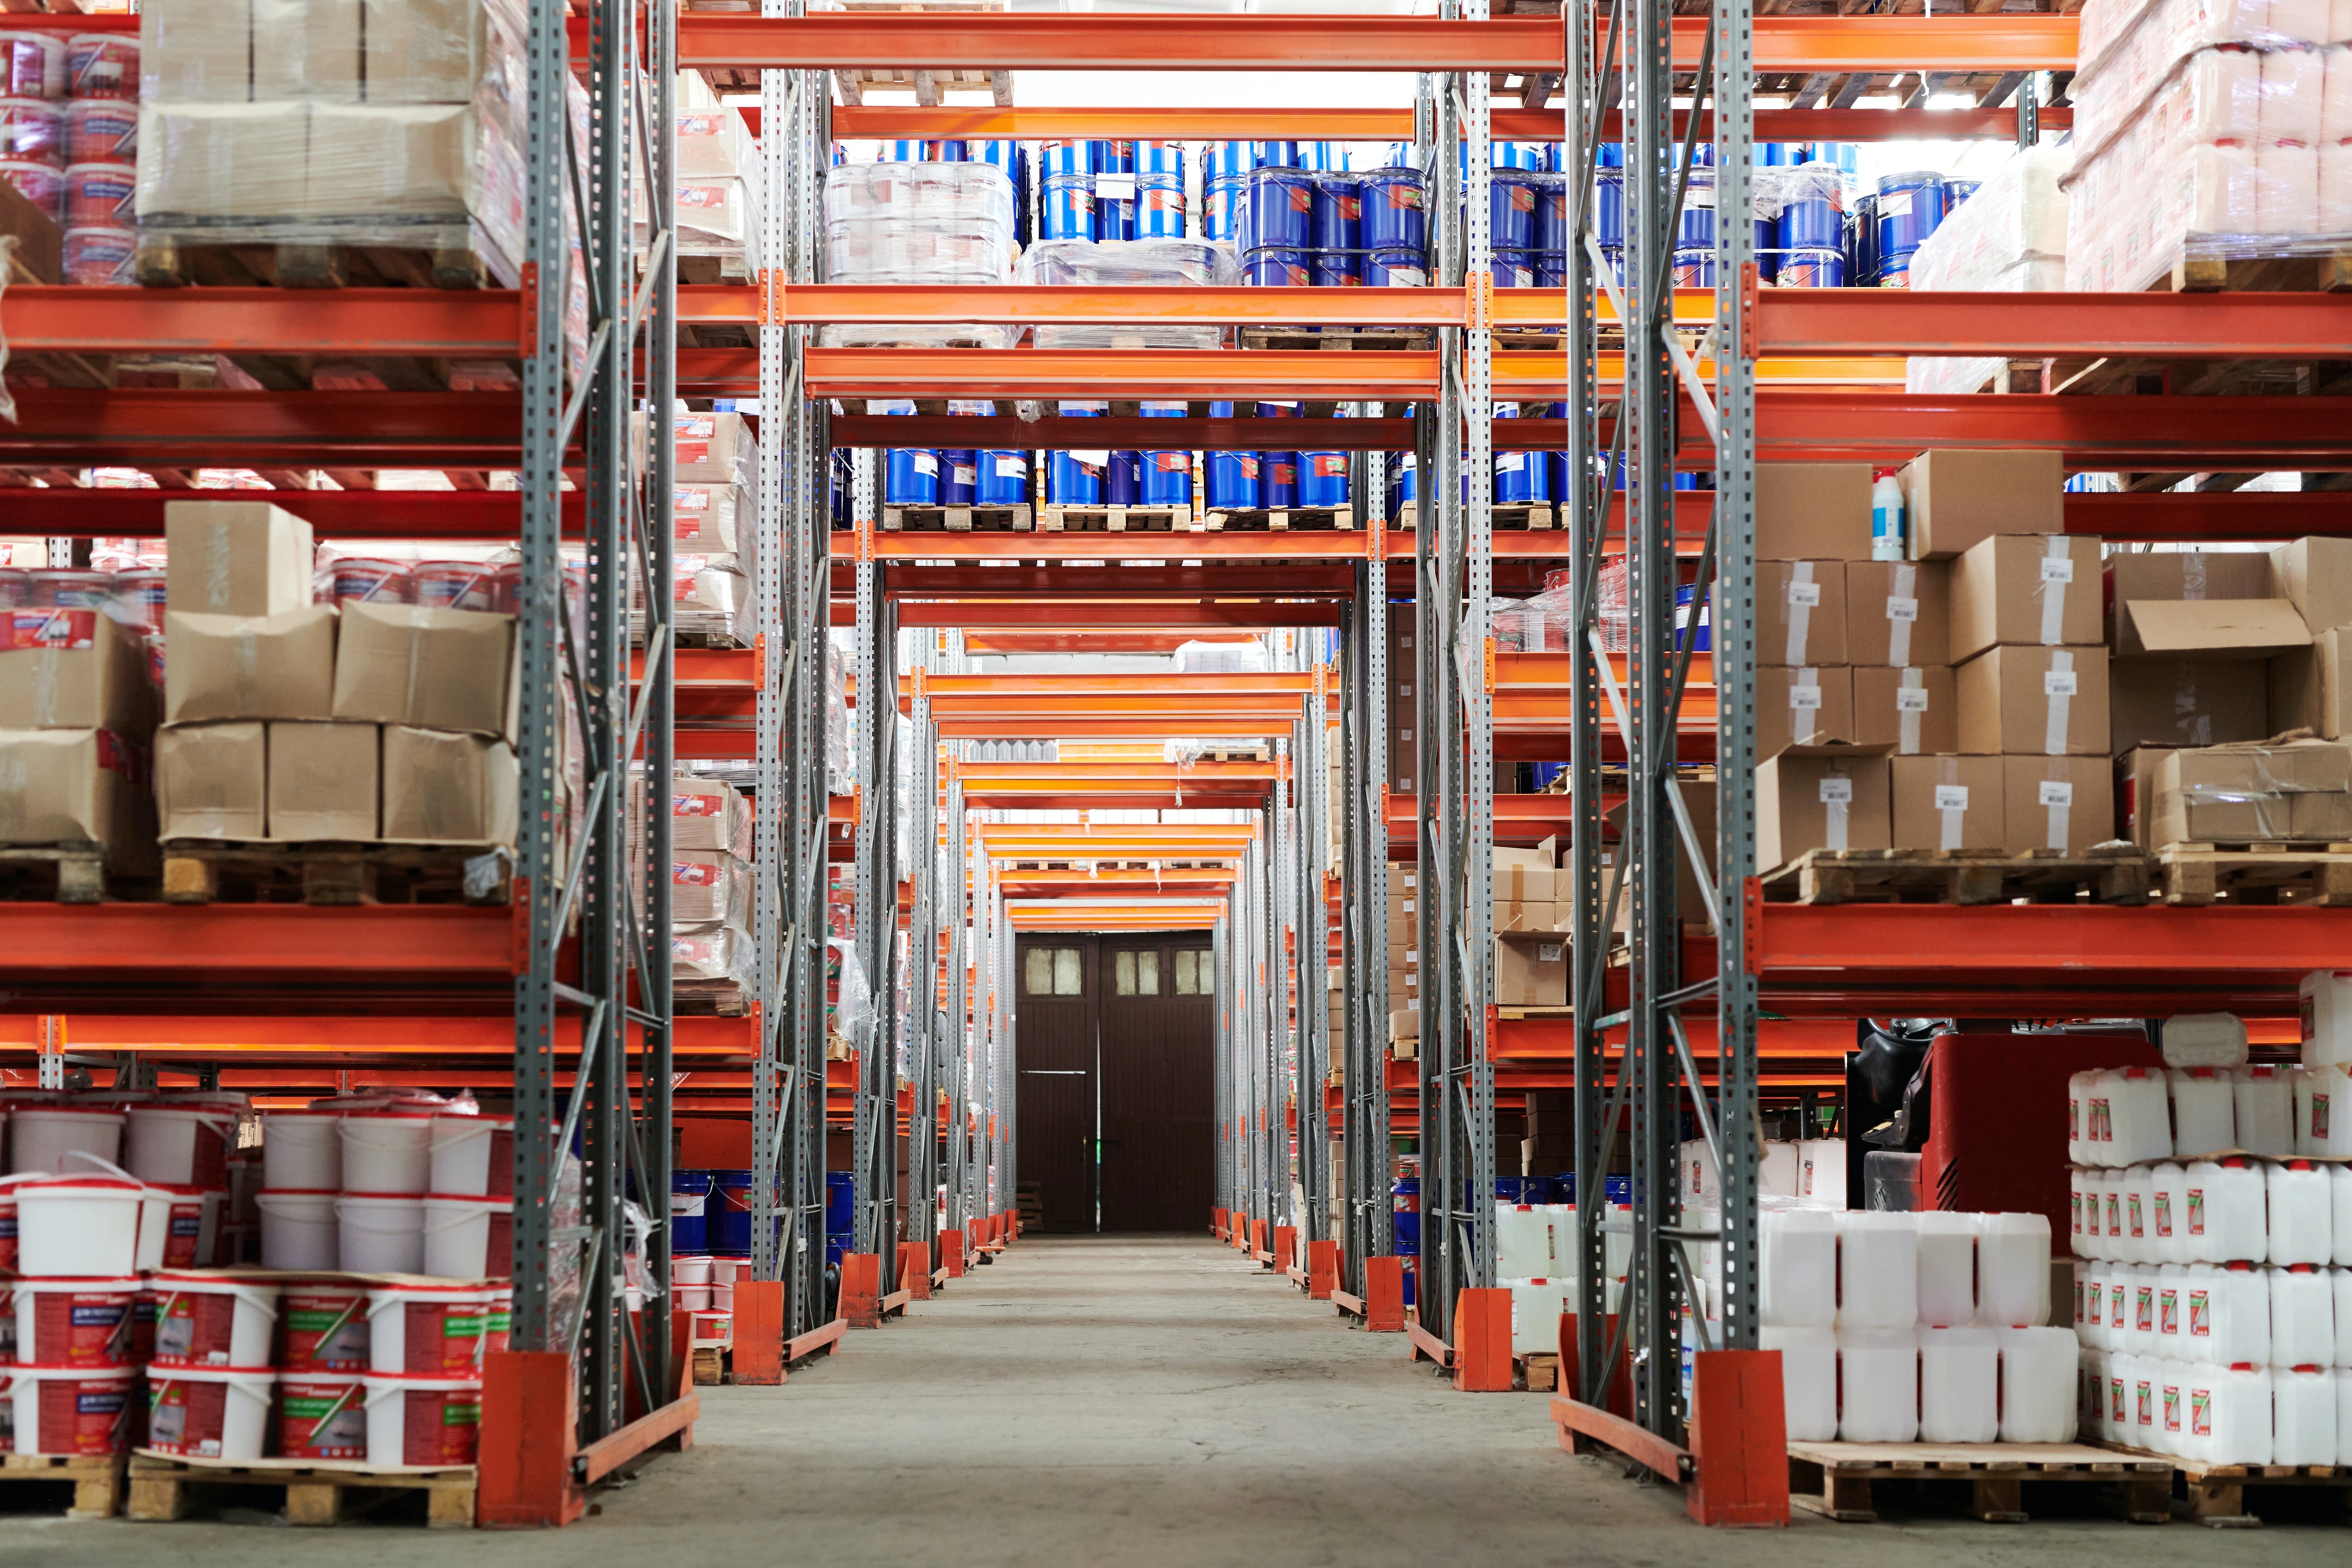 Warehousing & Distribution - Perfect Storage or Not?